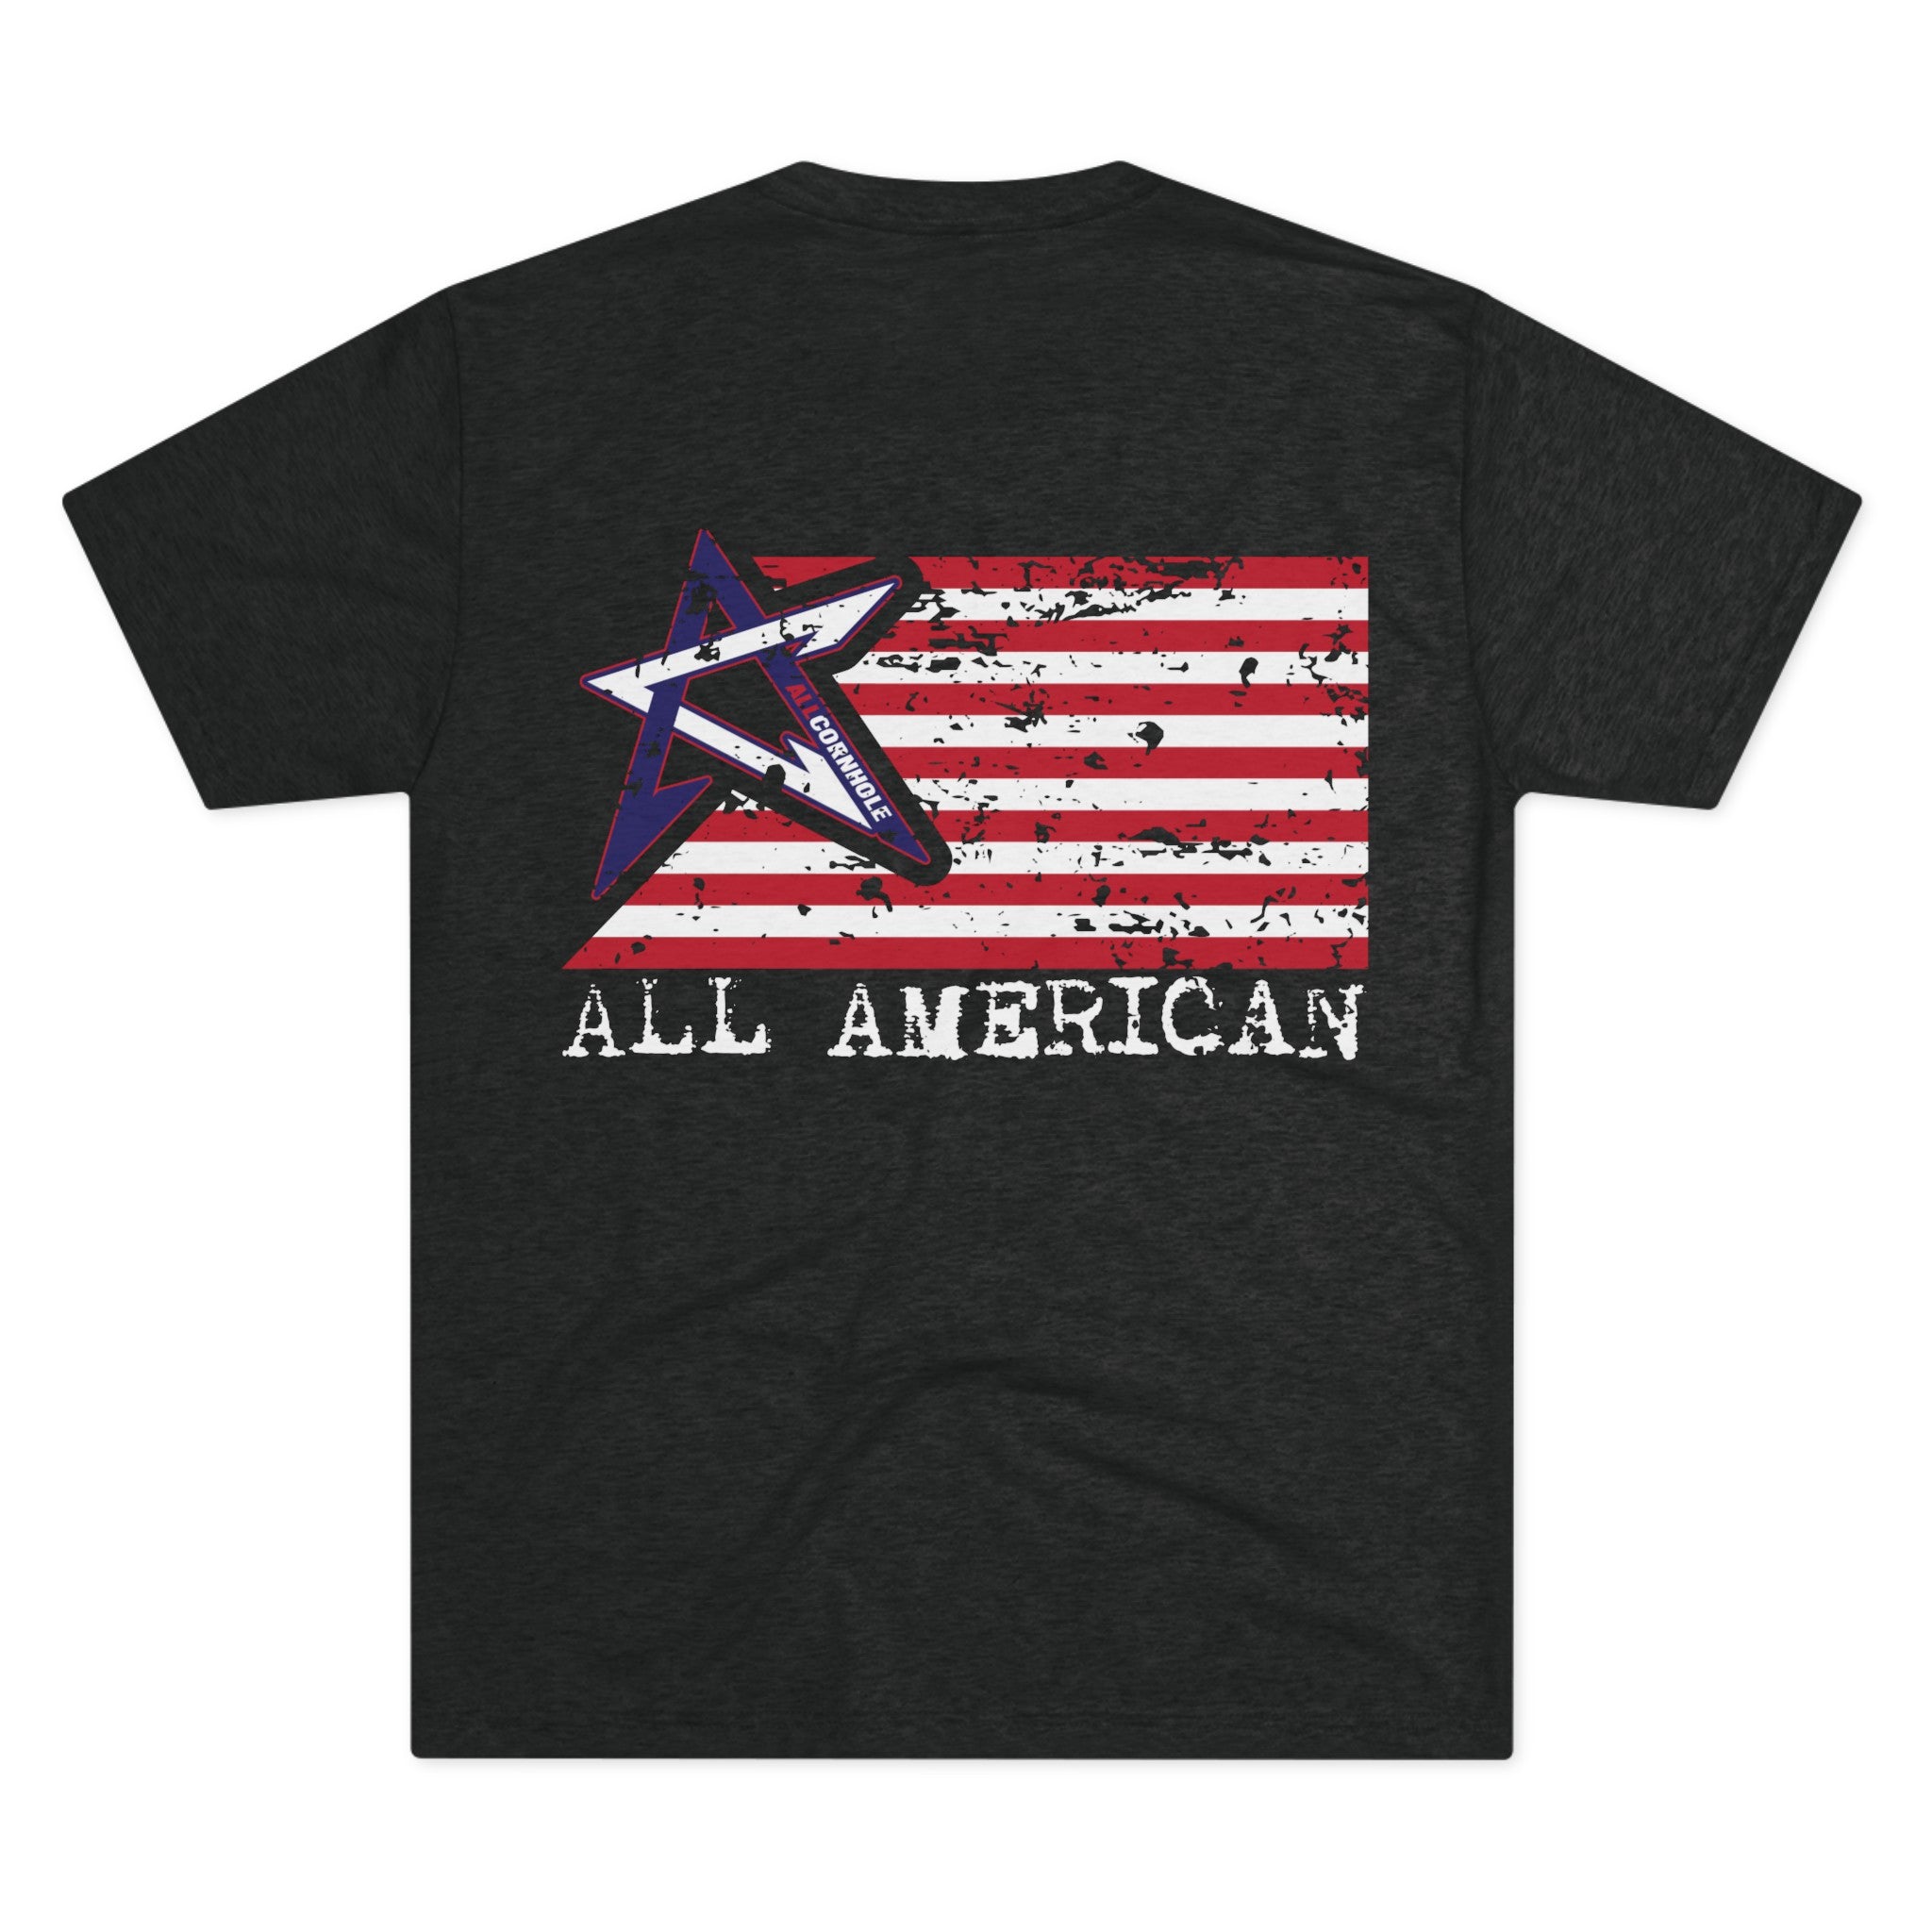 Unisex Tri-Blend Crew Tee - "All American"